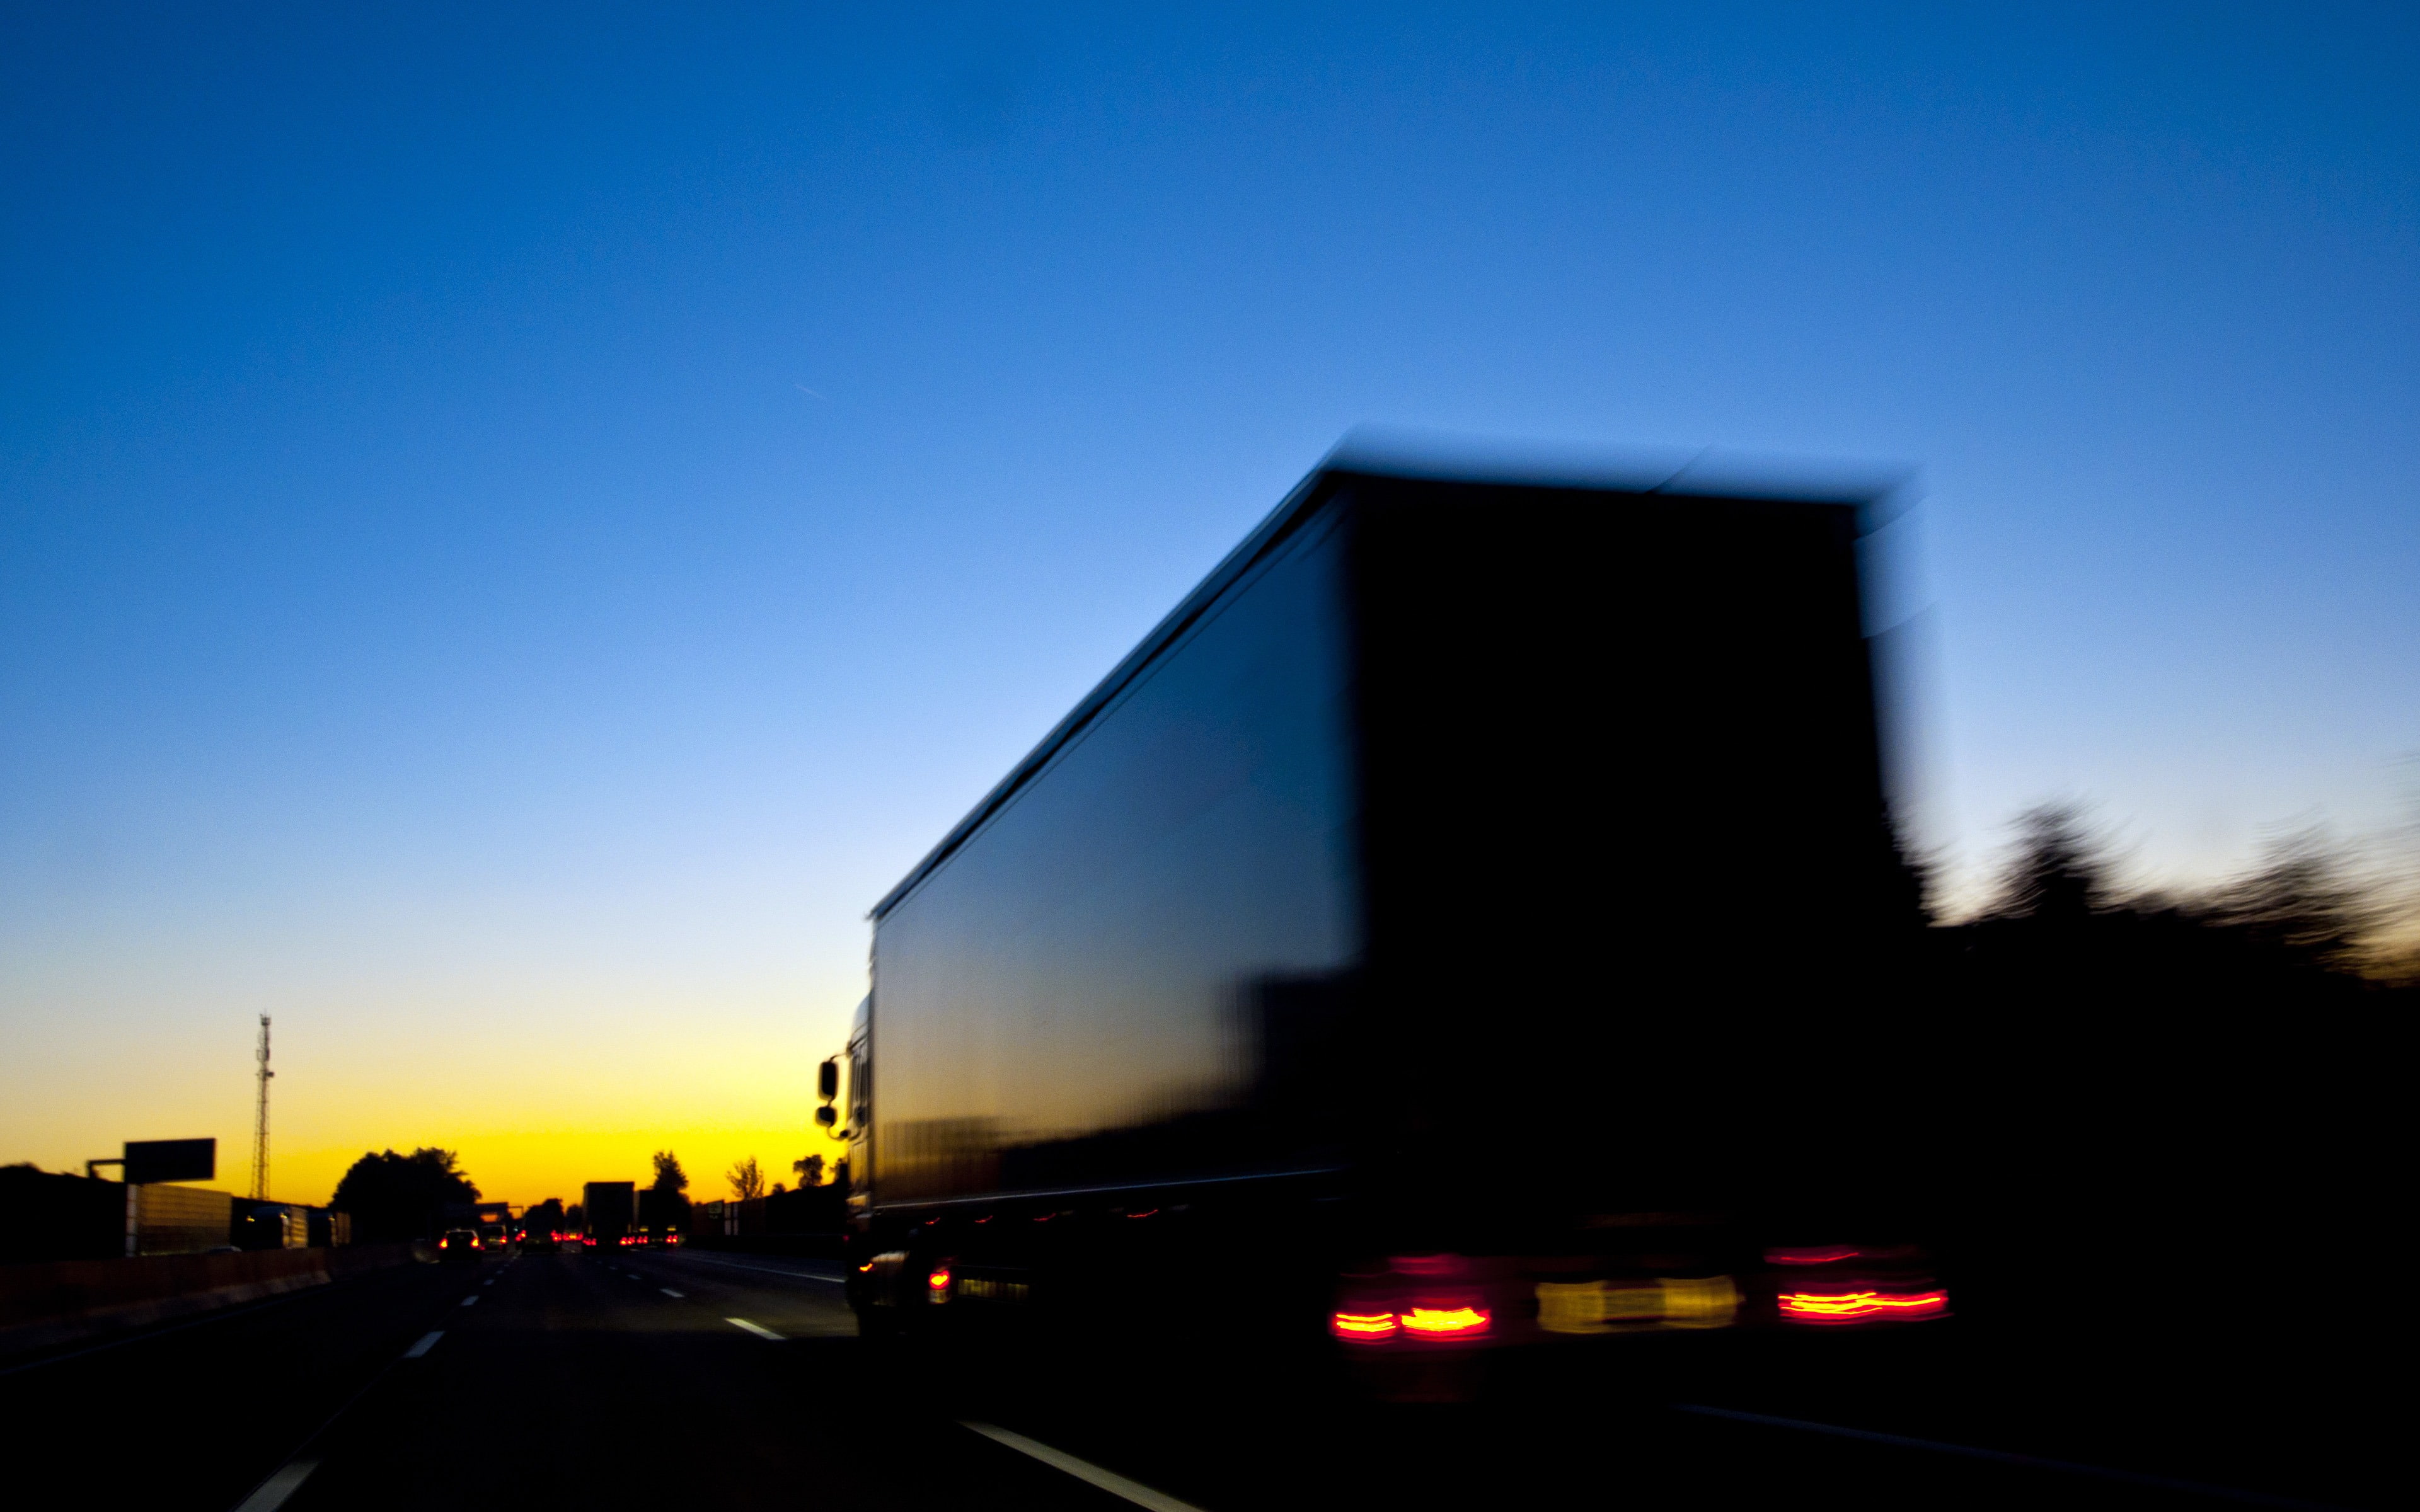 Modern highway car logistics truck evening, motor vehicle, mode of transportation